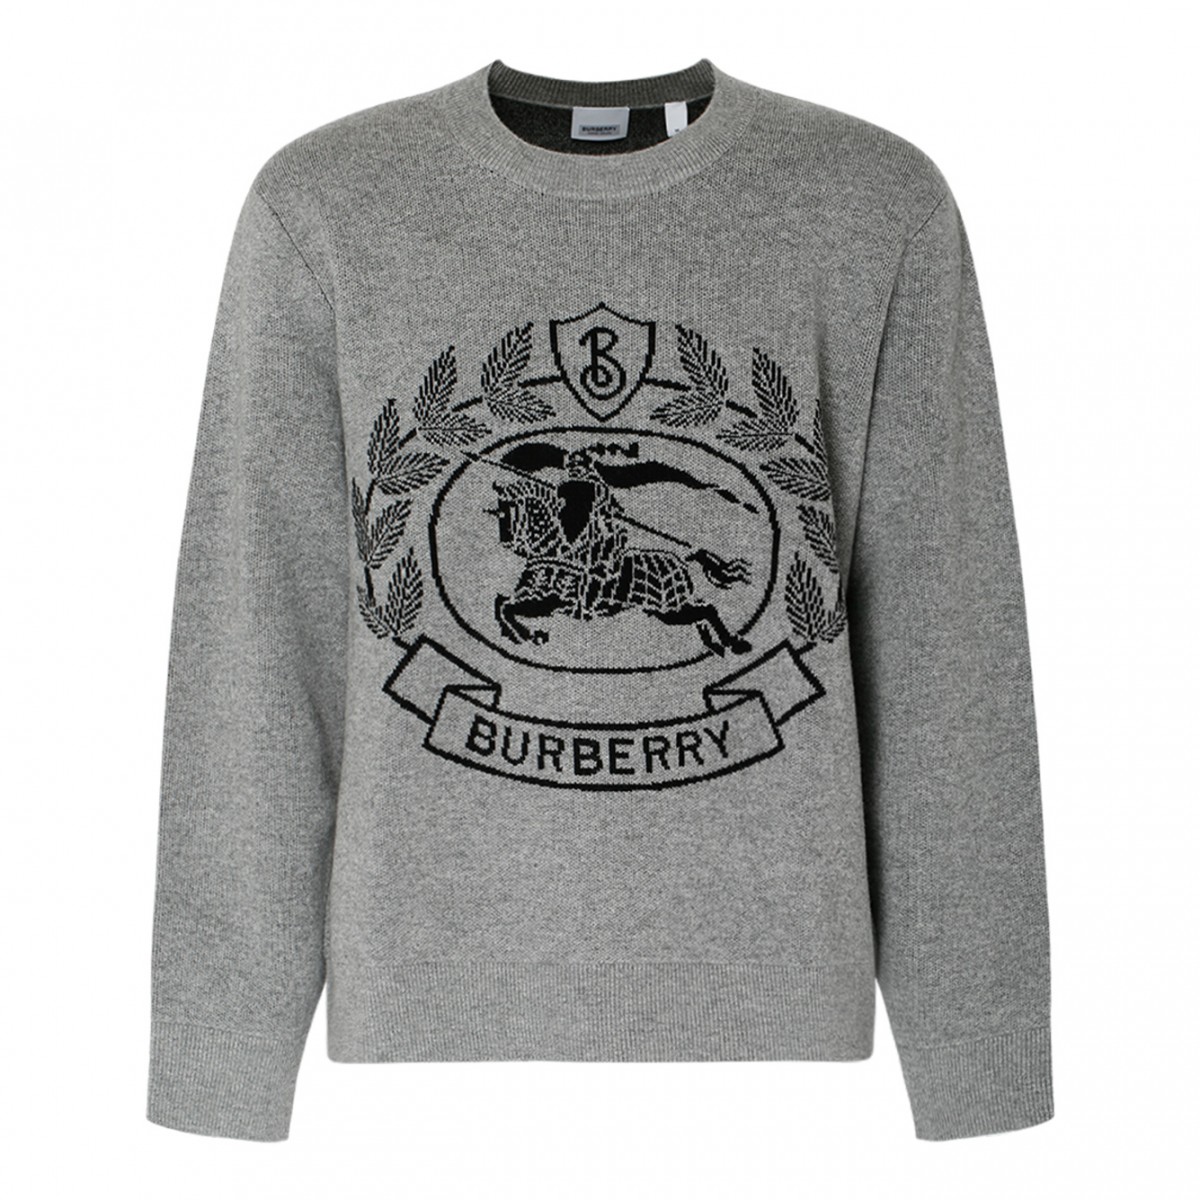 Burberry Black and Grey Intarsia Wool Sweater. 